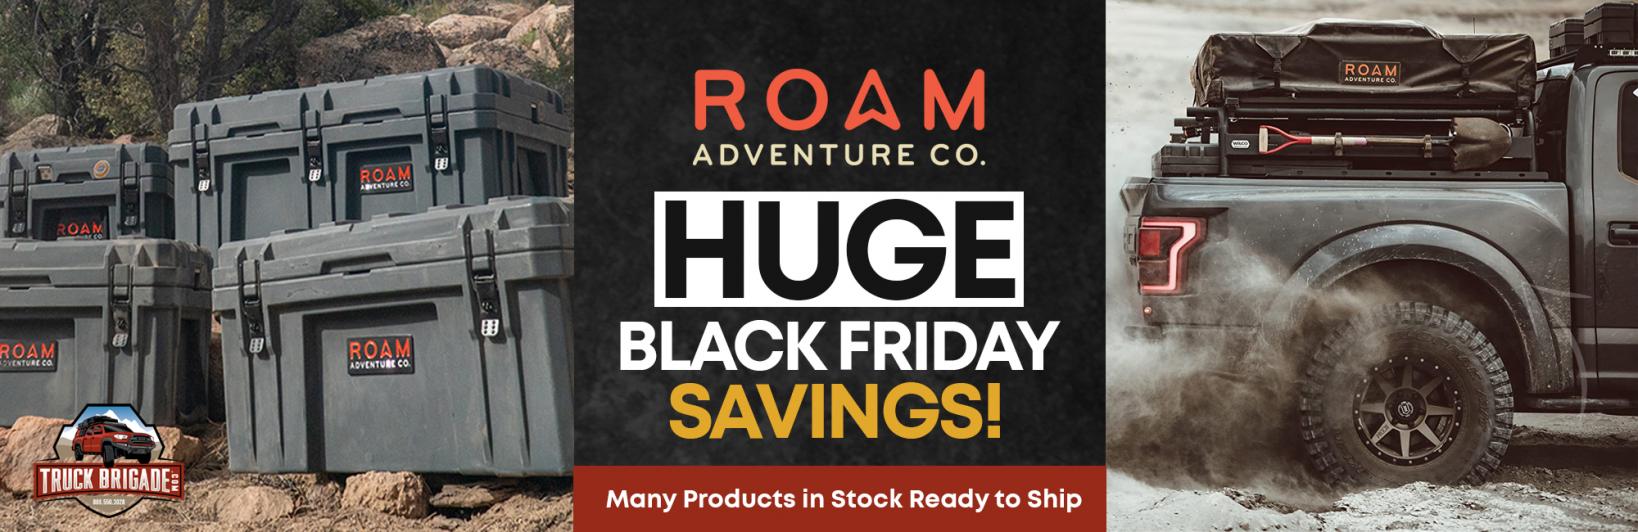 ROAM Adventure Co. Black Friday // Cyber Monday Savings!-roam-bf-banner-truck-brigade-jpg